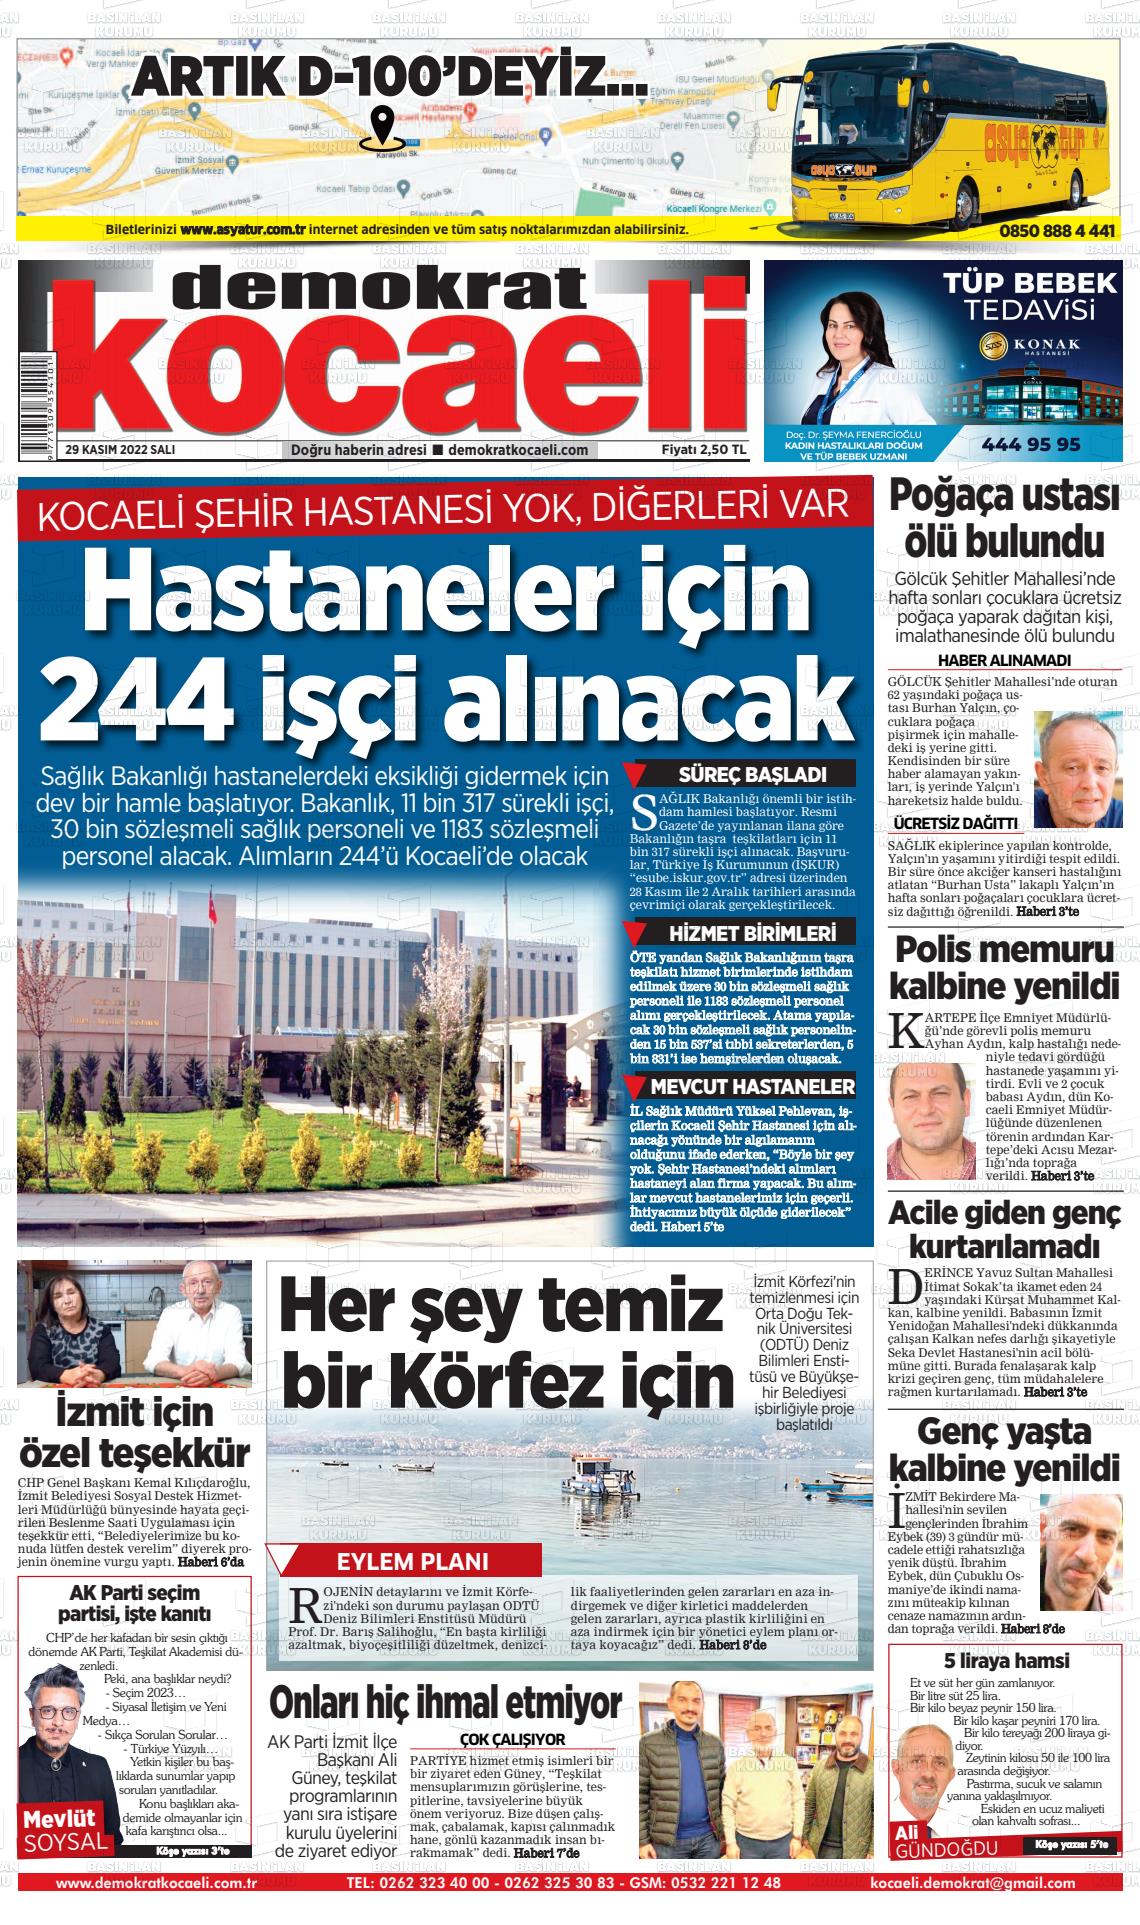 29 Kasım 2022 Demokrat Kocaeli Gazete Manşeti